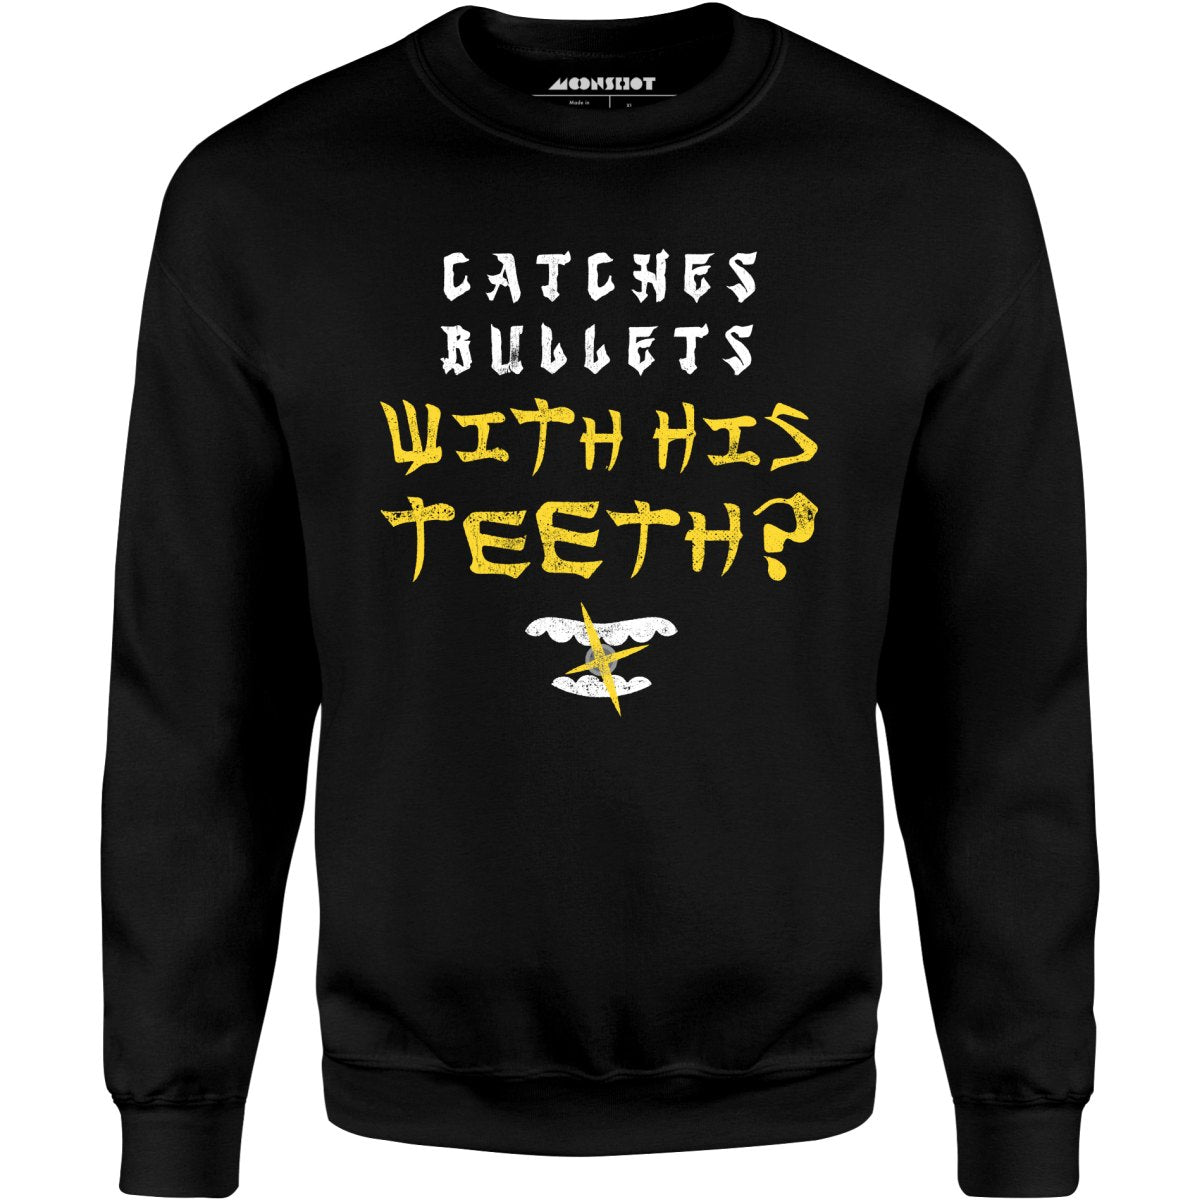 Last Dragon - Catches Bullets With His Teeth? - Unisex Sweatshirt